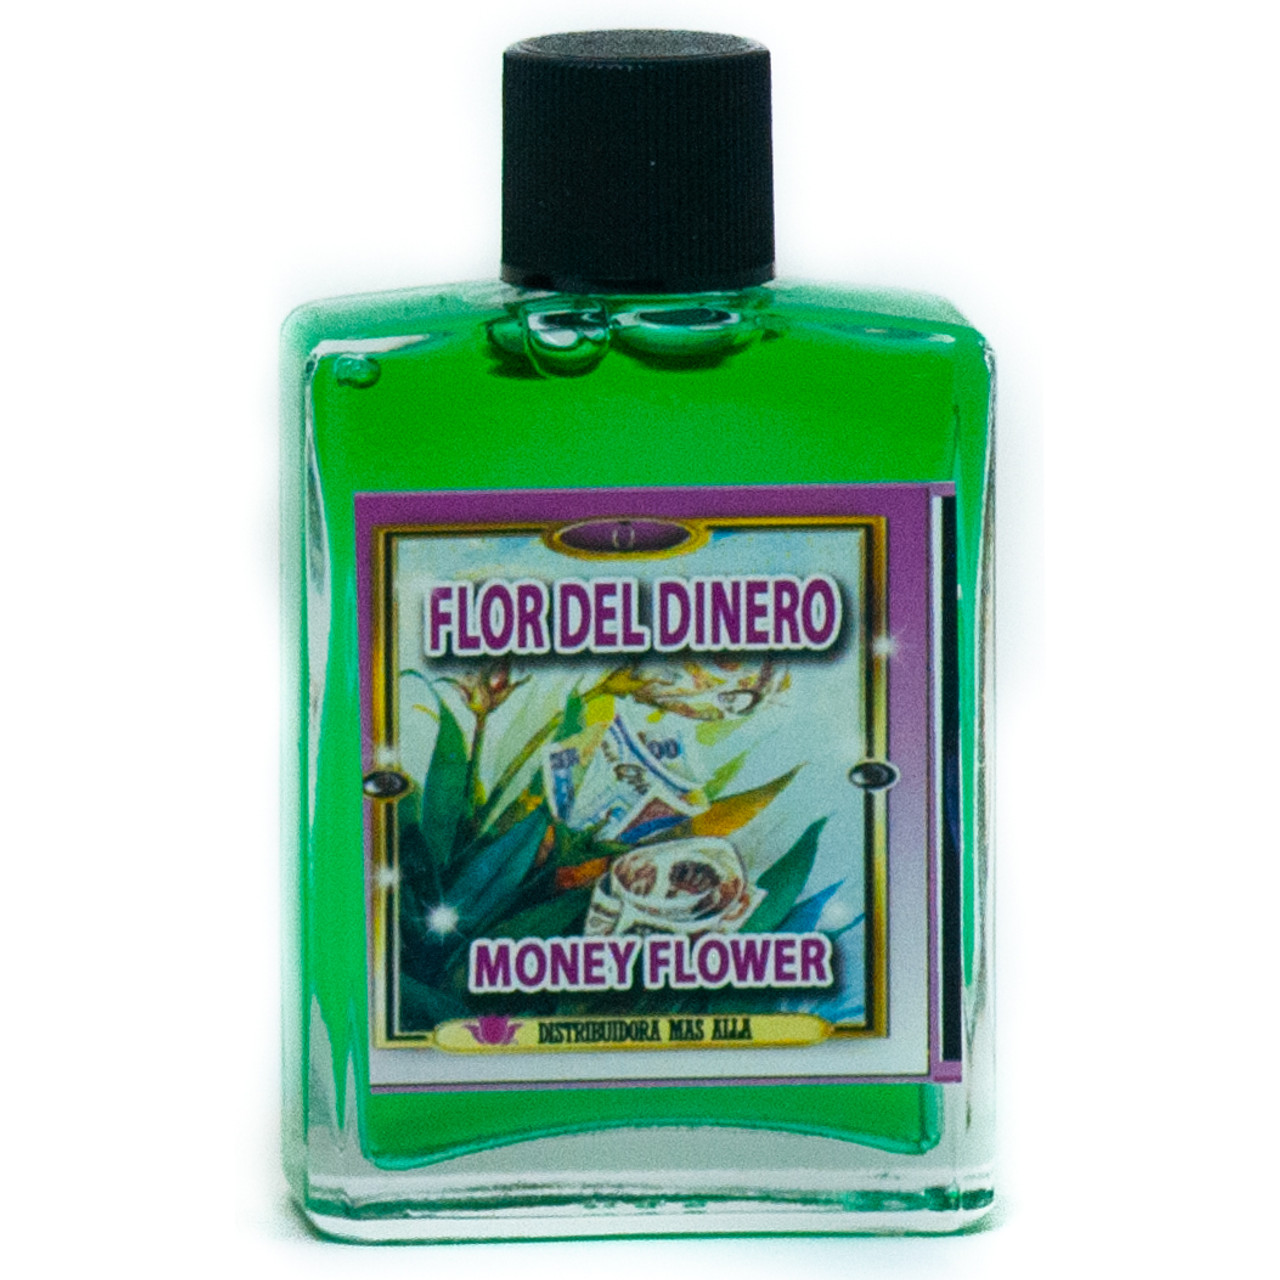 Perfume Flor Del Dinero - Money Flower Perfume